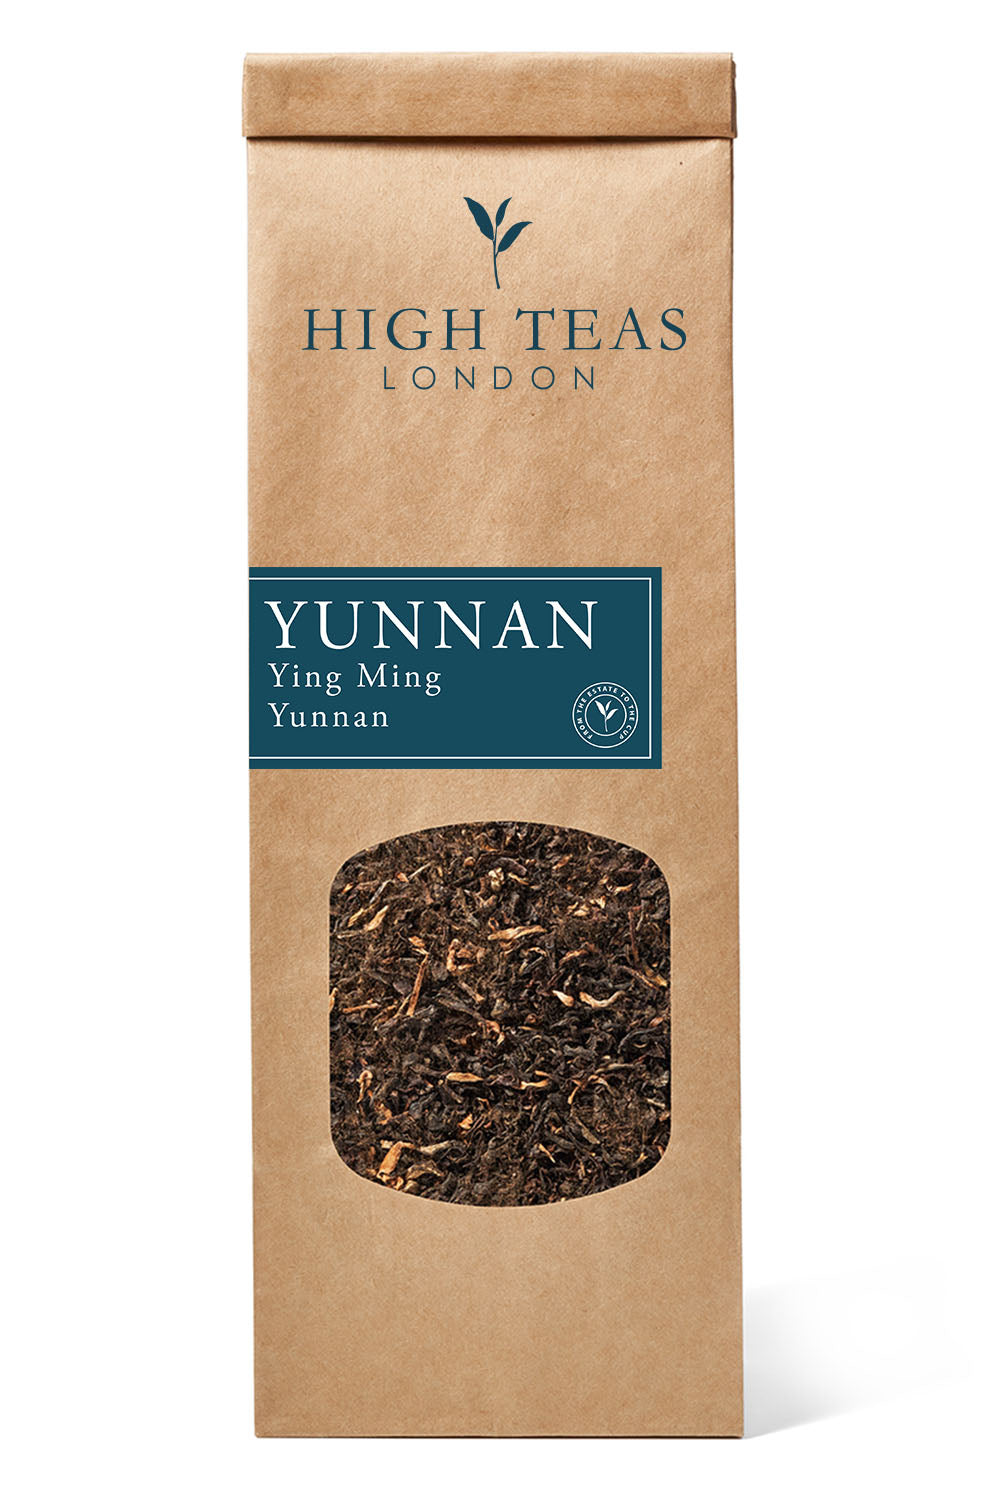 Ying Ming Yunnan-50g-Loose Leaf Tea-High Teas